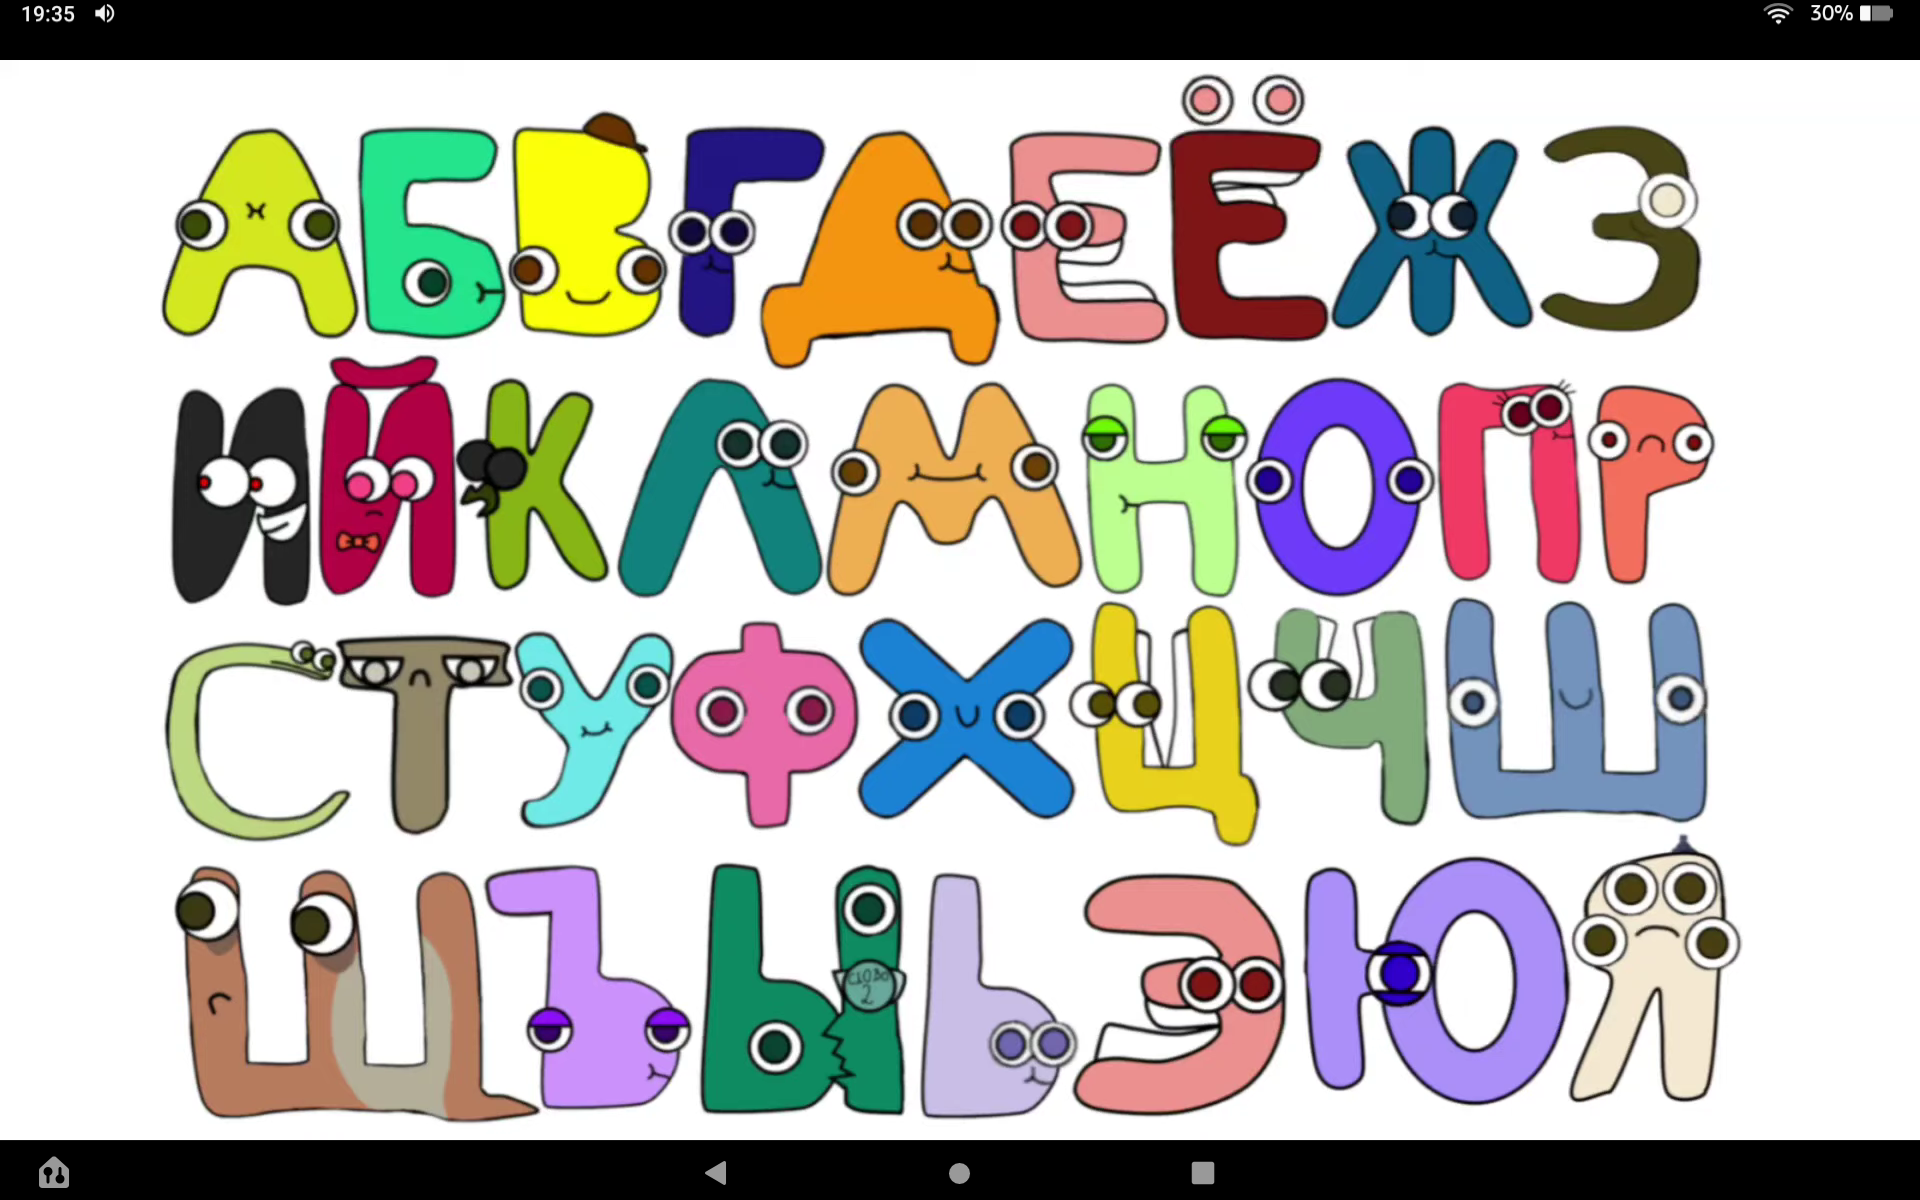 Russian Alphabet Lore - Temu